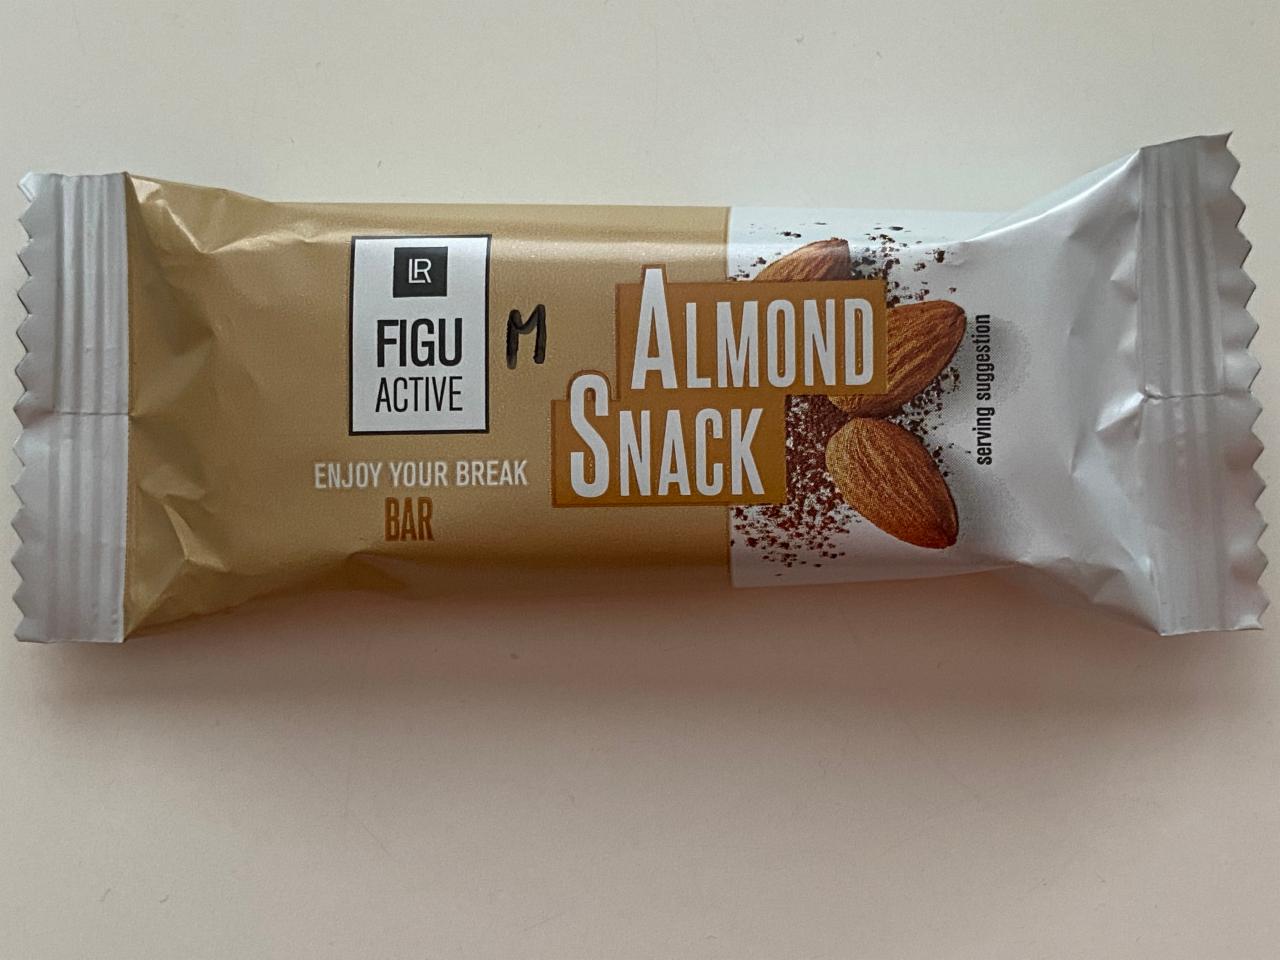 Fotografie - Almond Snack LR Figu Active